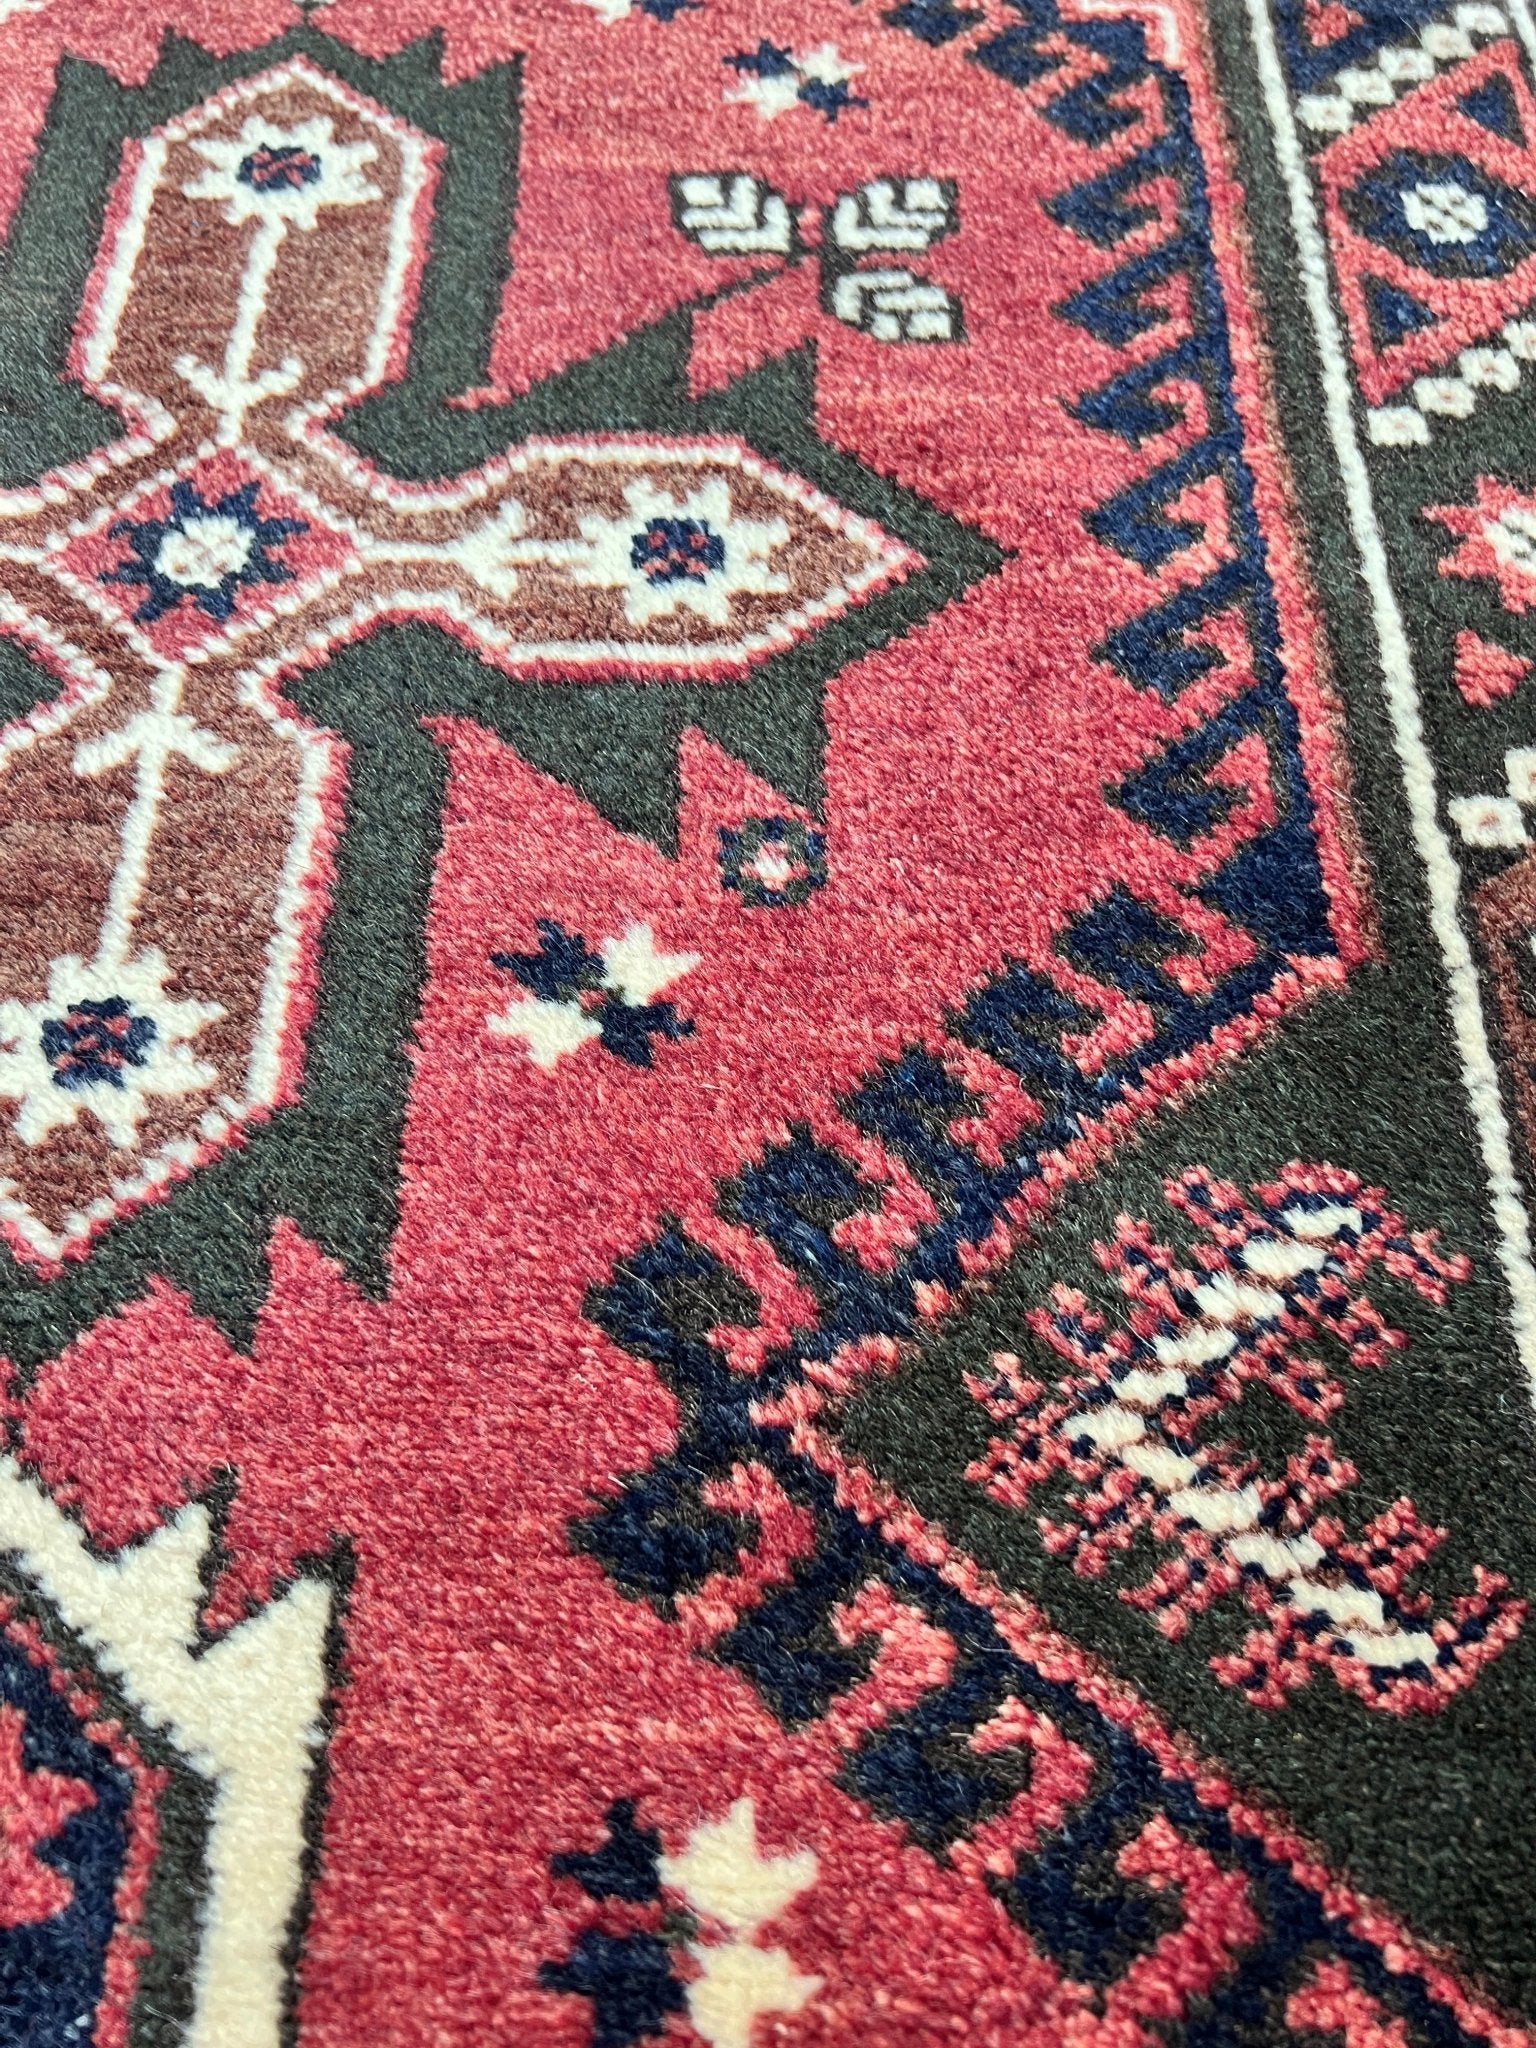 Dosemealti vintage turkish rug shop San Francisco Bay Area. 4x6 Scatter rug. Buy handmade oriental rug online